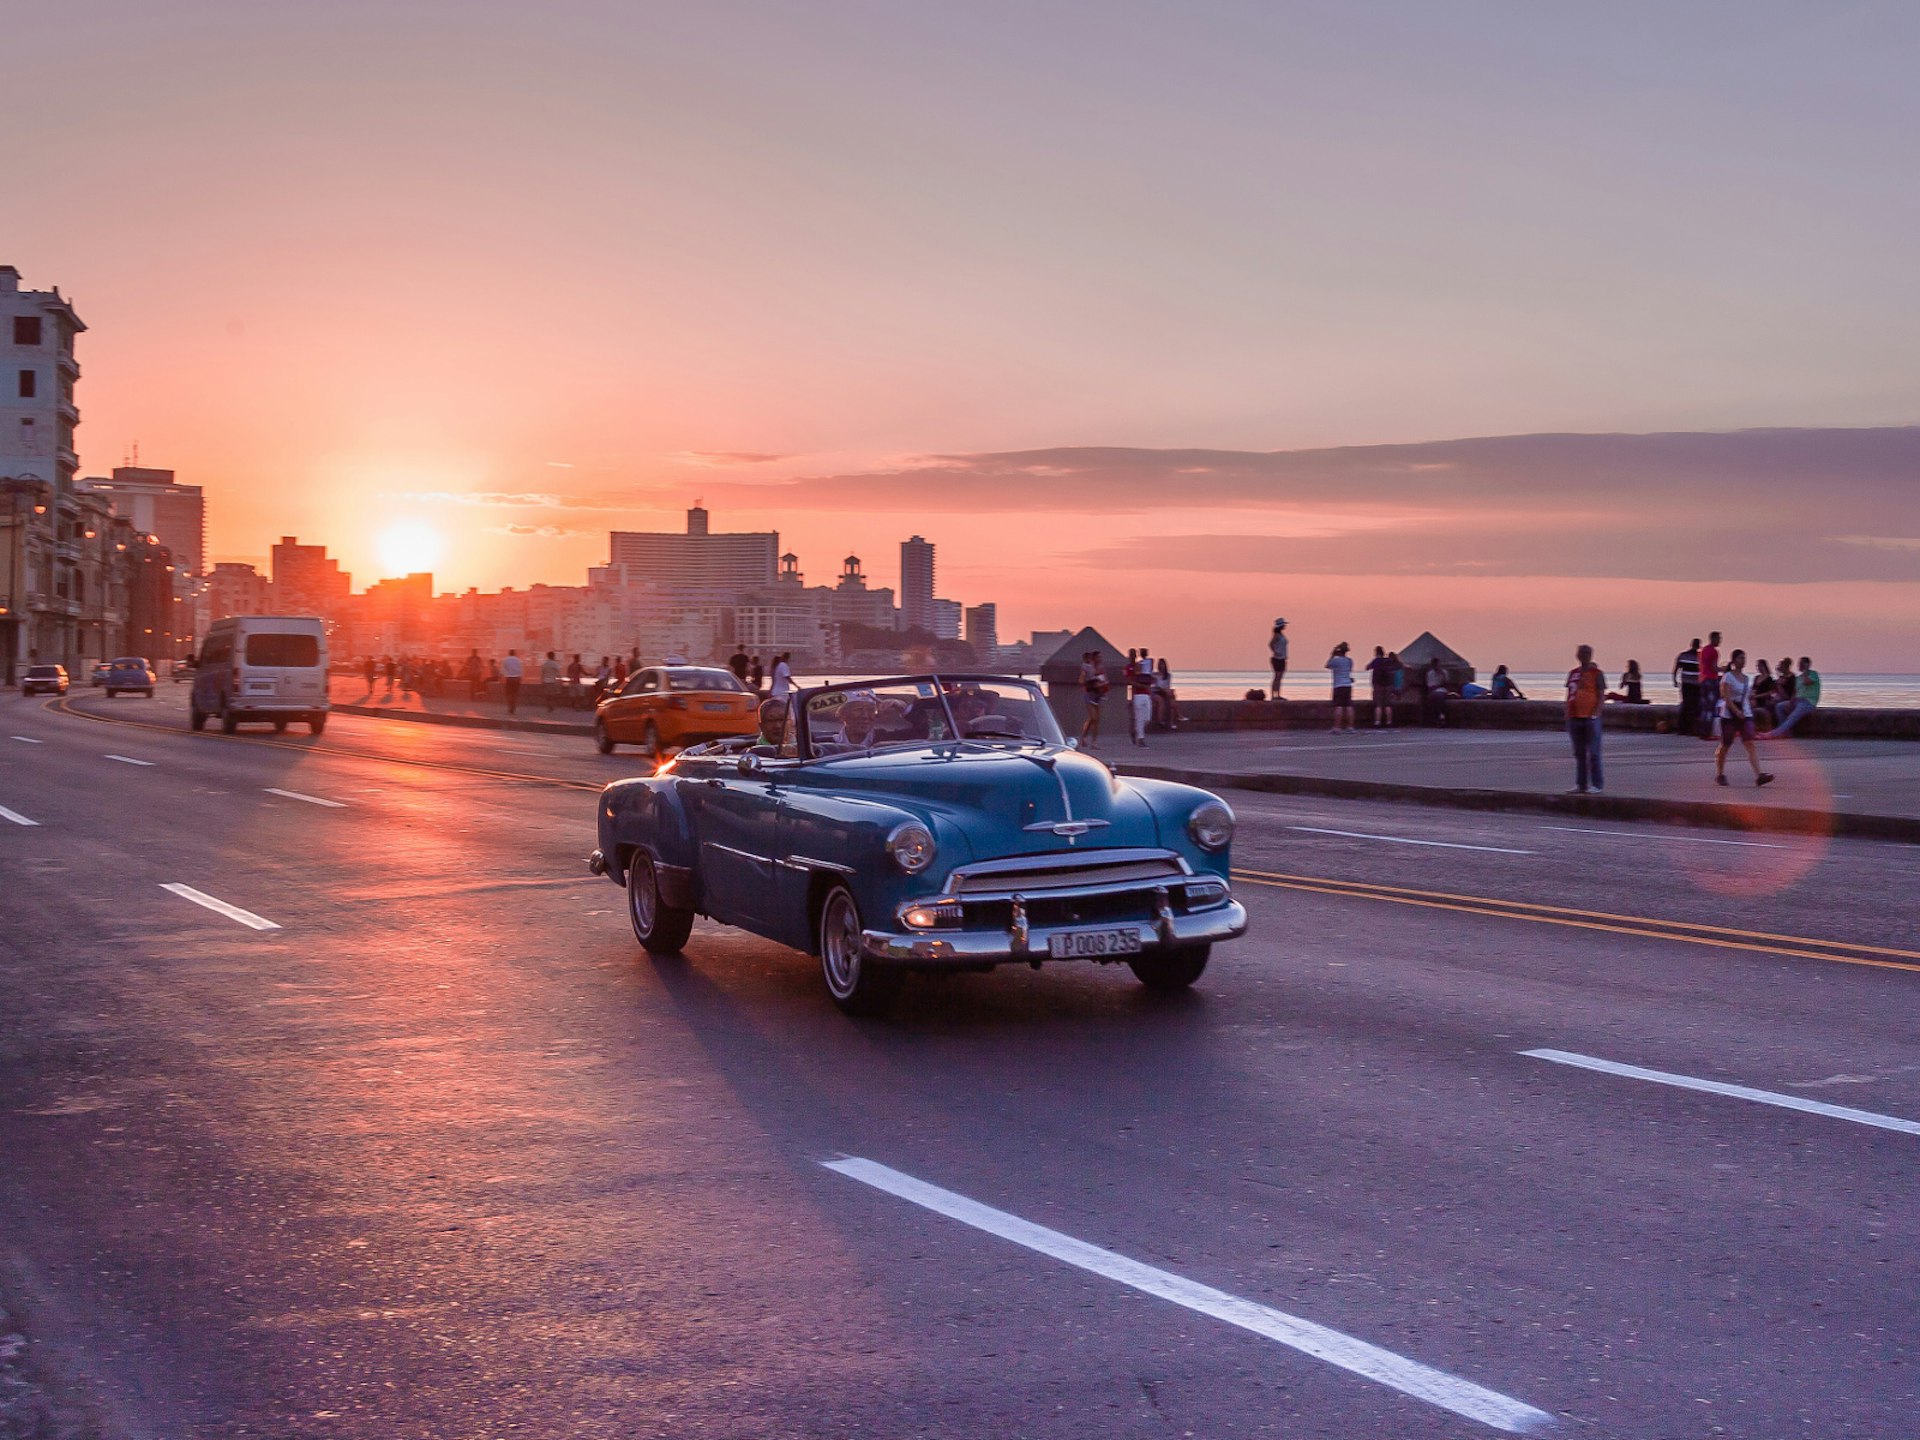 Driving the Malecon at sunset, Havana © Agota Kadar / Shutterstock